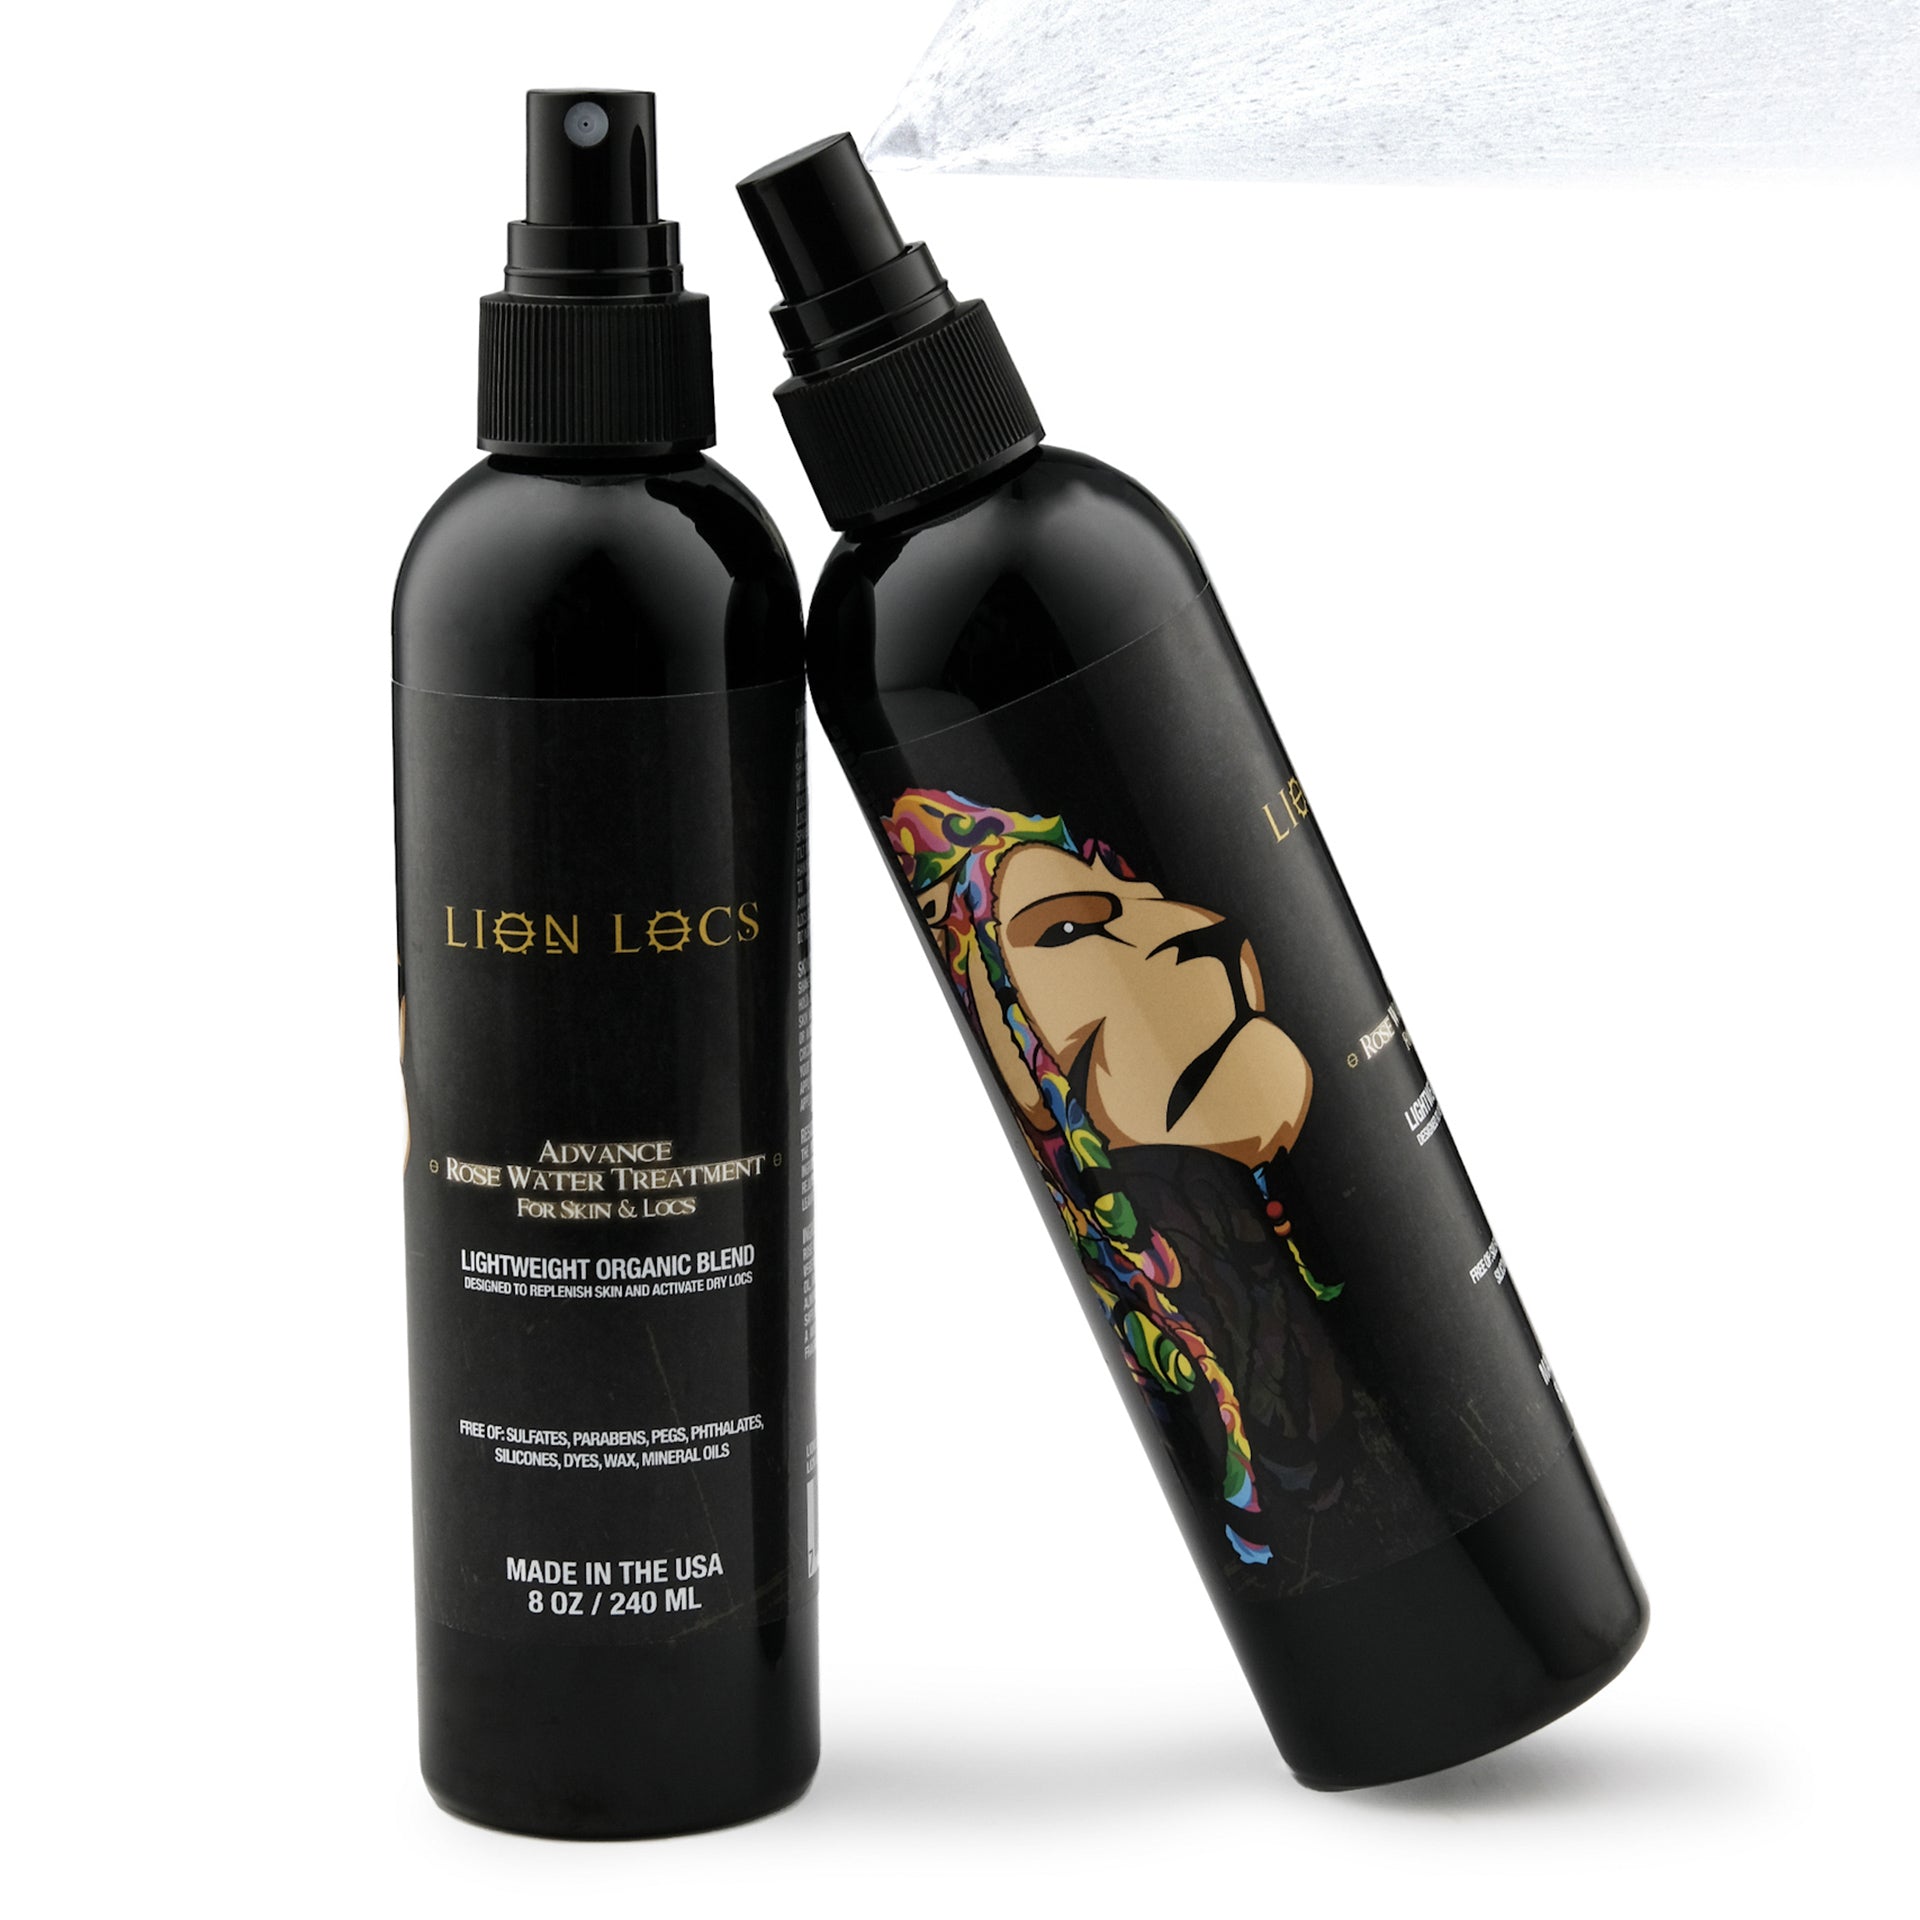 Advanced Rose Water Spray Treatment – LionLocs